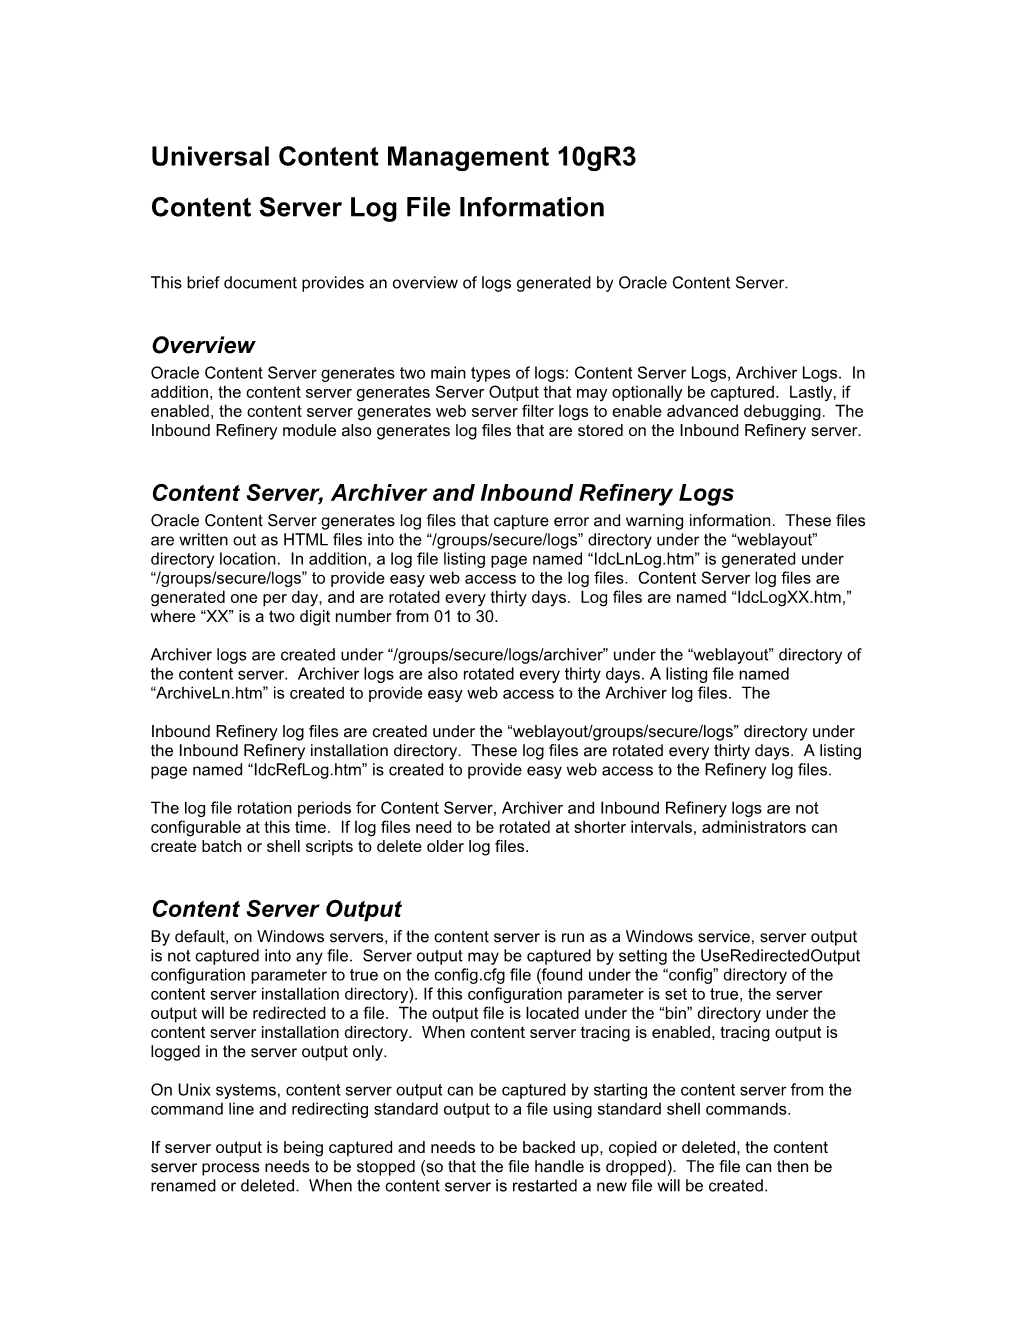 Universal Content Management 10Gr3 Content Server Log File Information